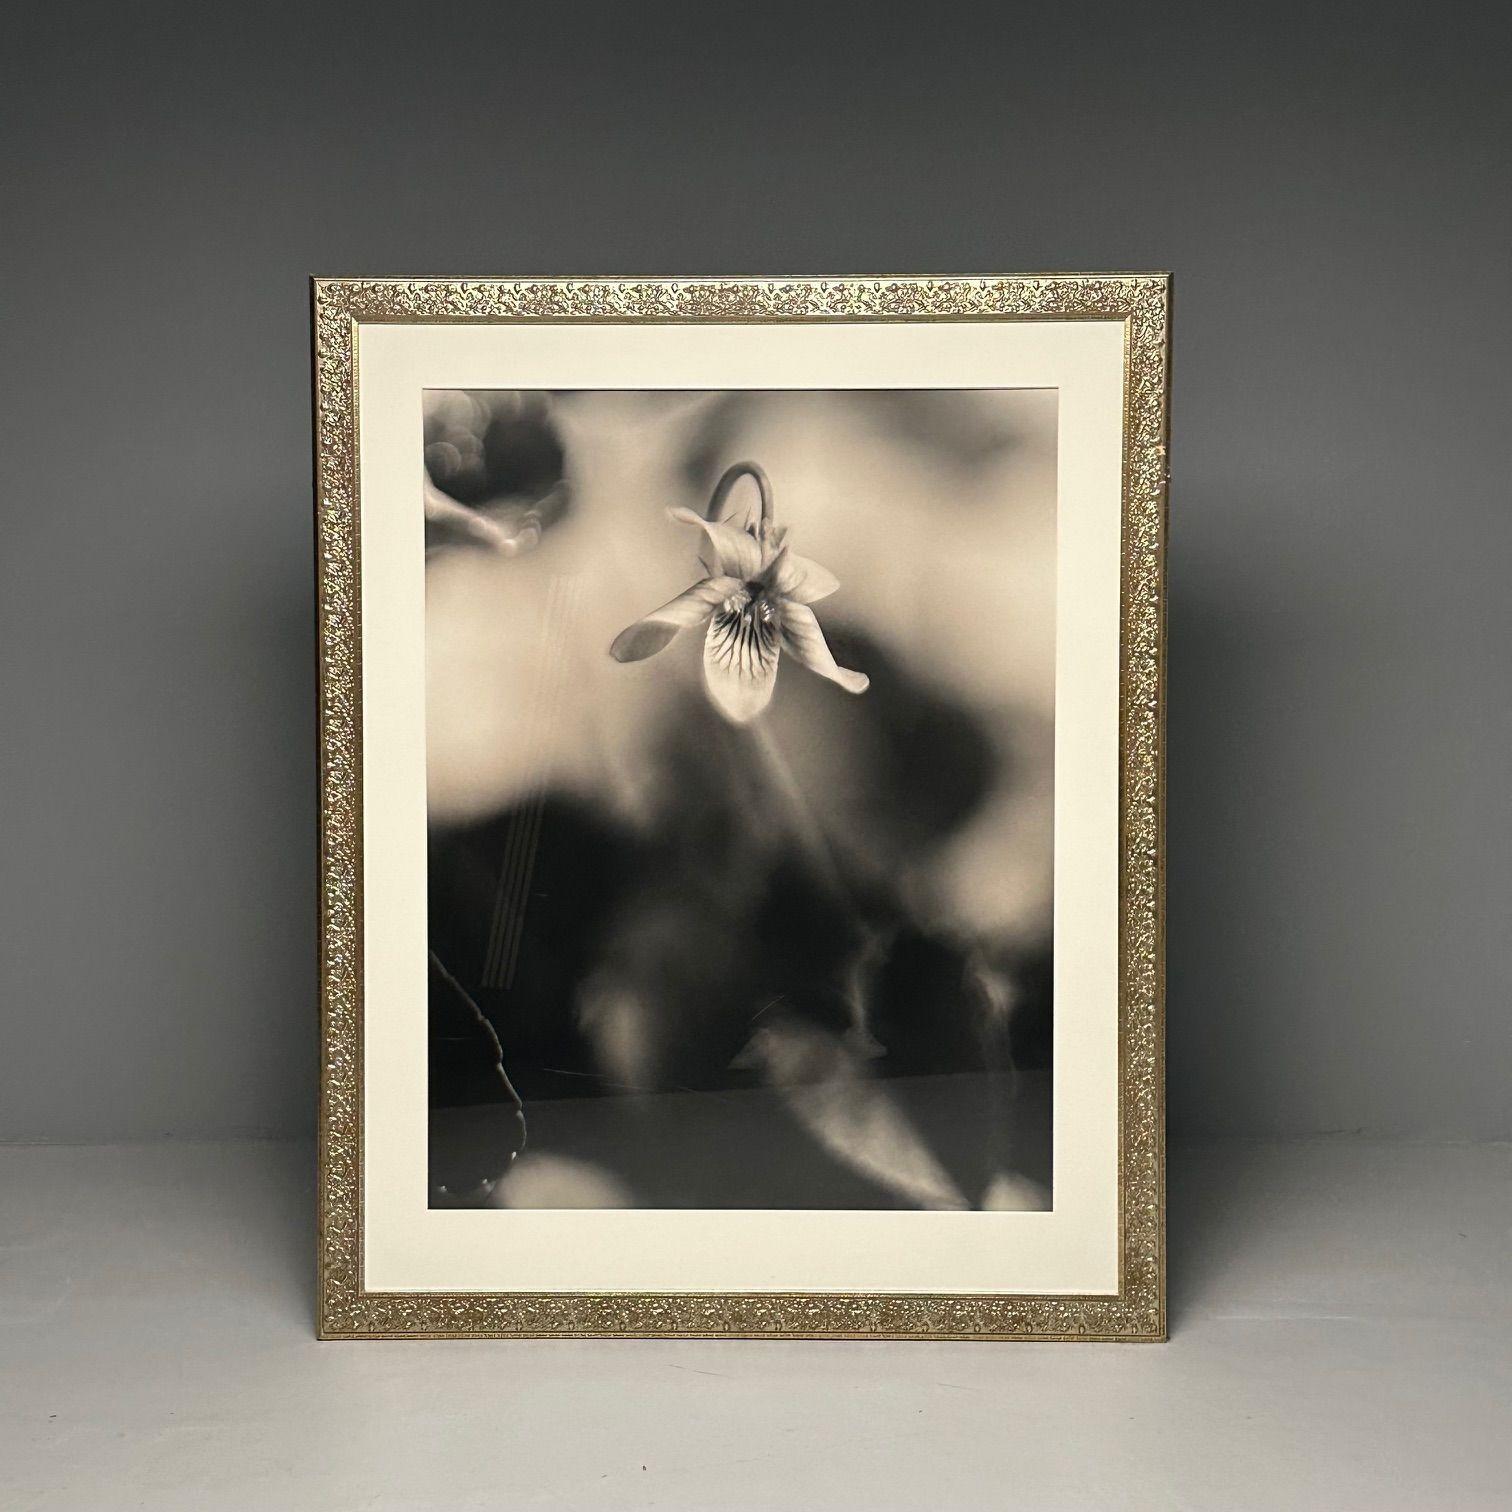 American Modern, Large Black and White Photographs, Floral Still Life, Framed, 1990s For Sale